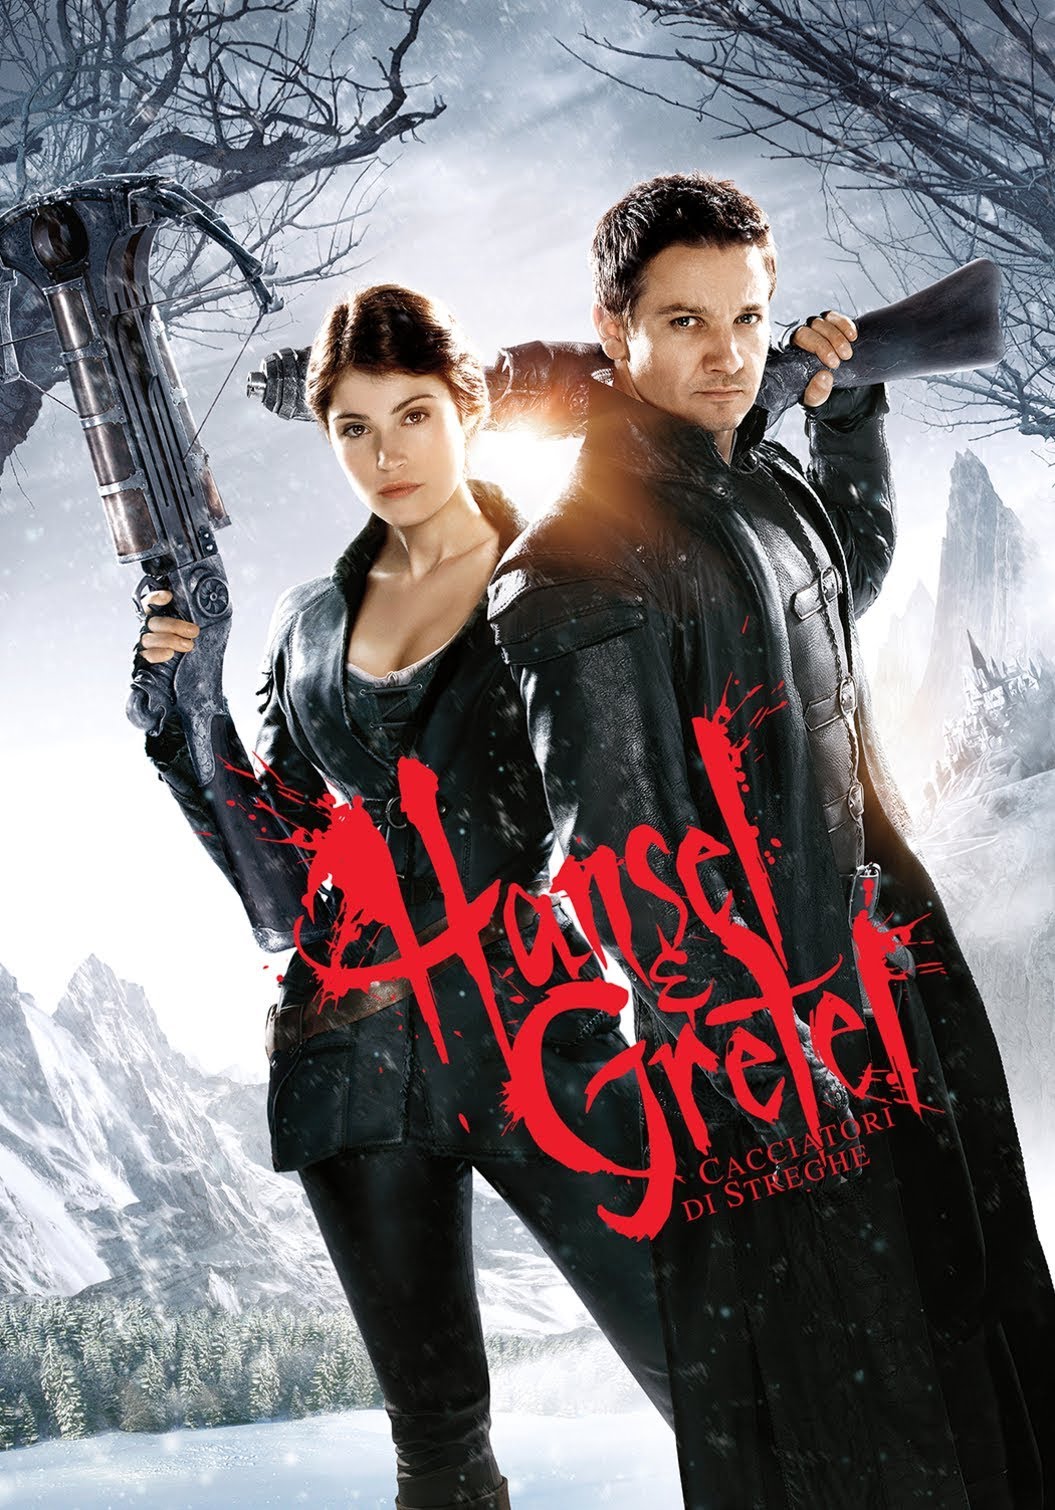 Hansel & Gretel: Cacciatori di streghe [HD] (2013)